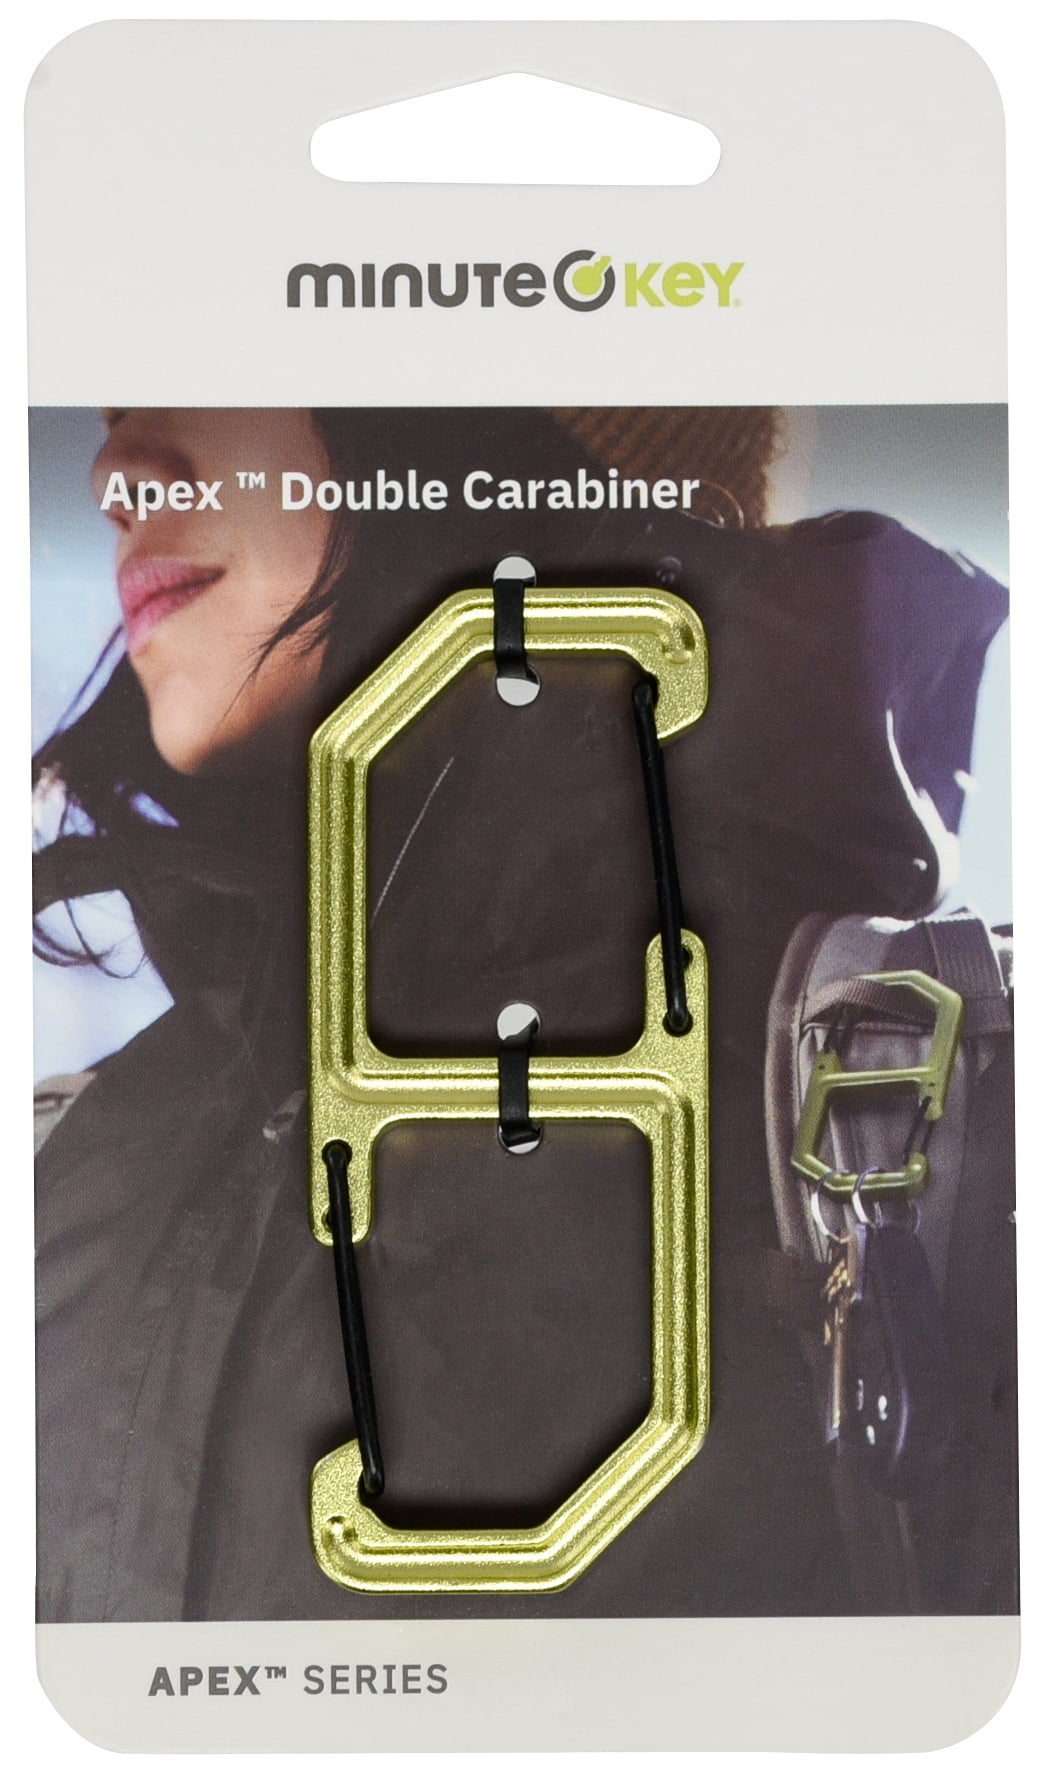 Minute Key Apex Double Carabiner, Key Holder, Aluminum, Black